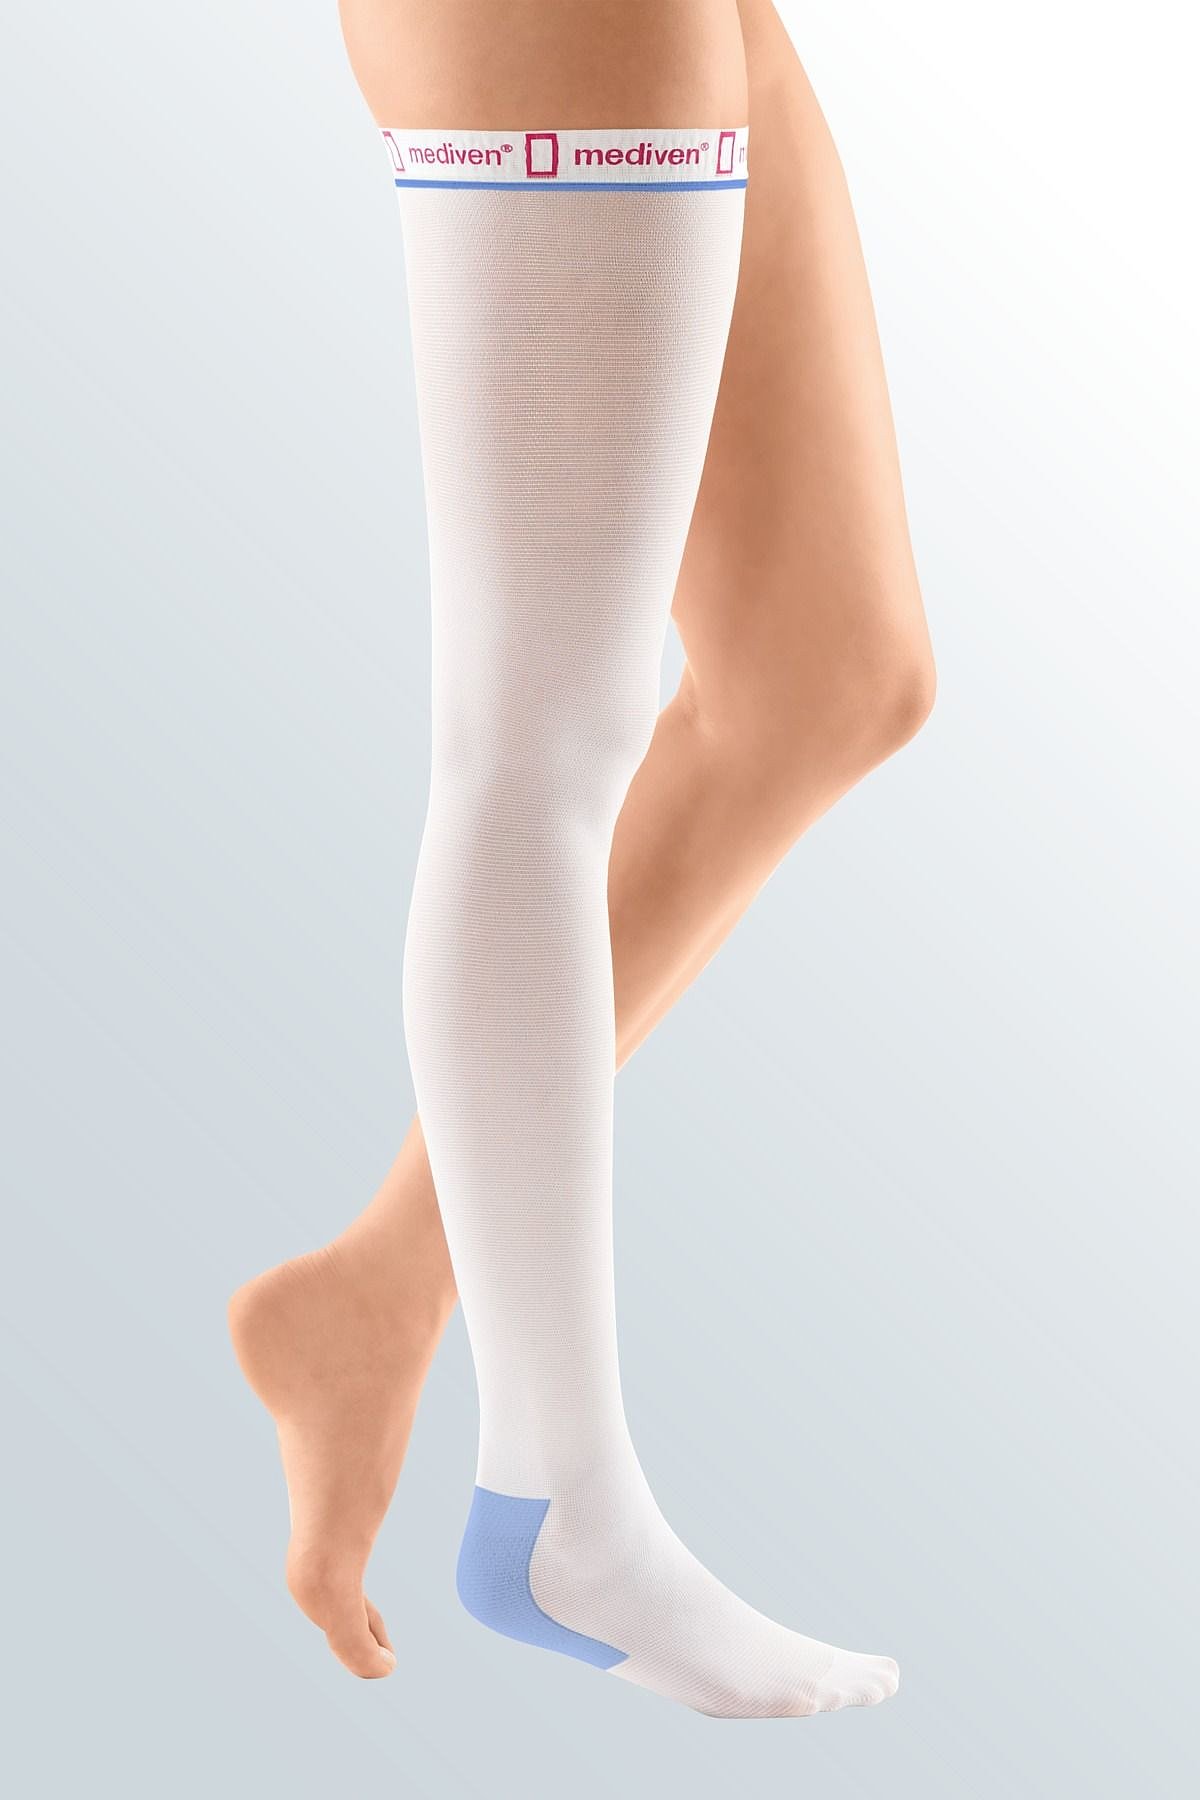 LONGLUAN Royalaura Medical Grade Compression Stockings, Medical Compression  Socks for Women, Medias De Compresion para Varices, Medical Grade